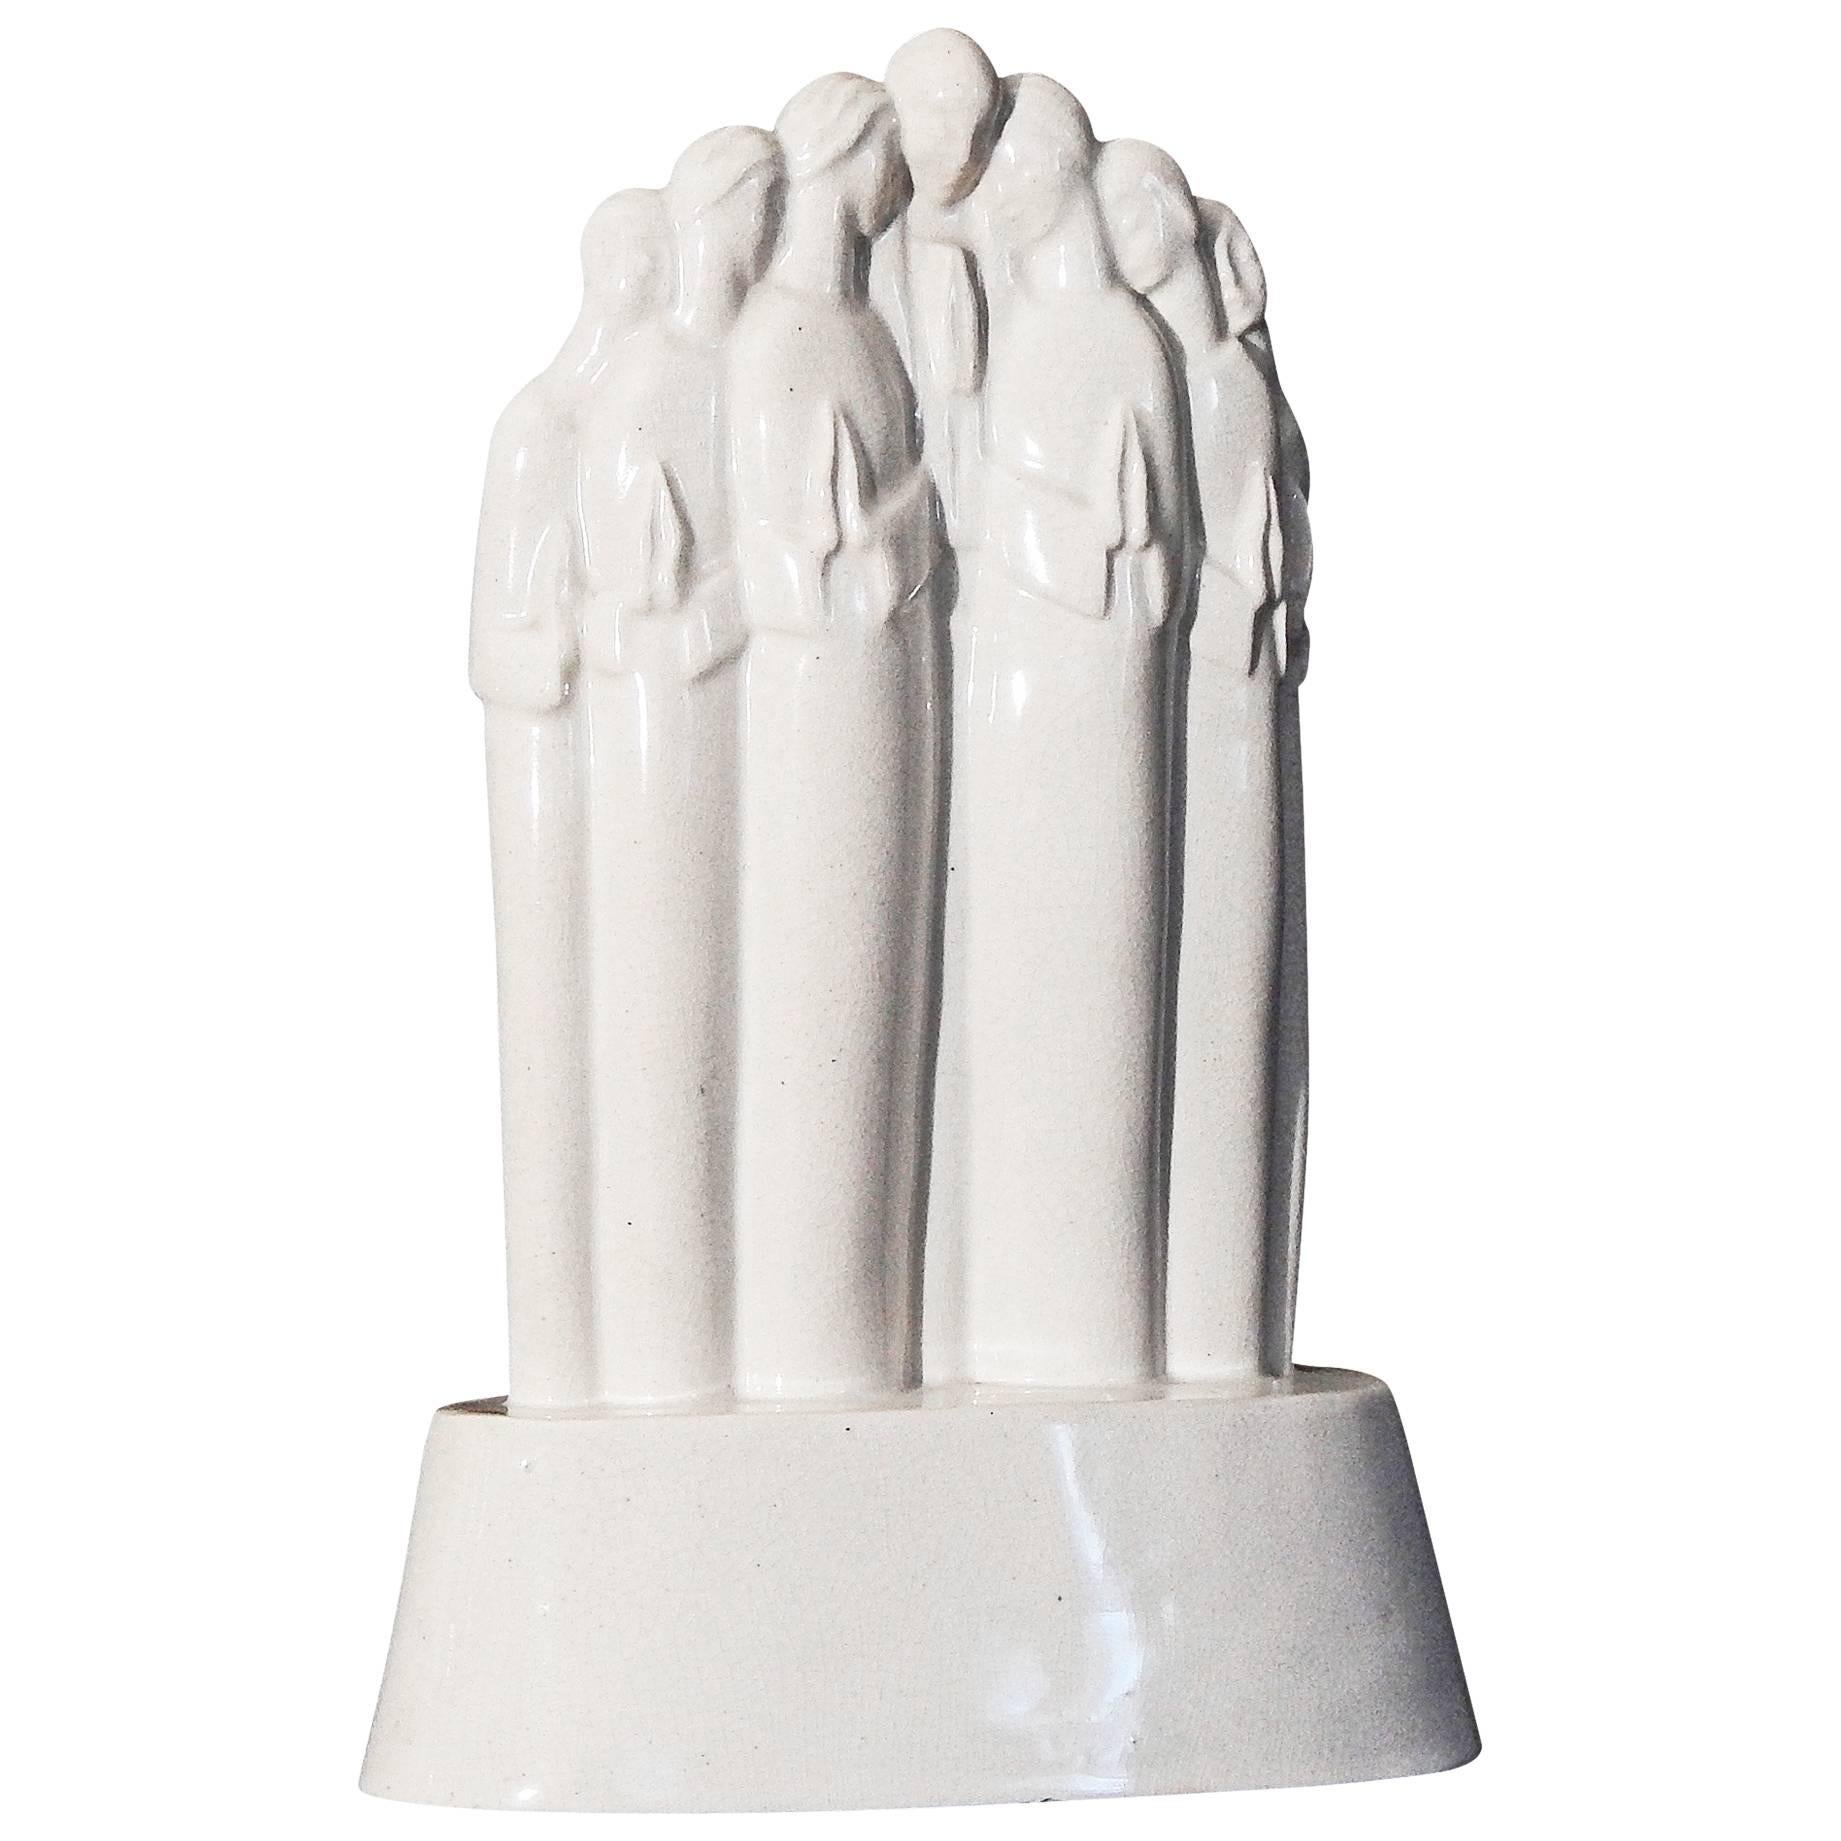 "Supplication, " Art Deco Sculpture from Archipenko's Ceramic School, Woodstock